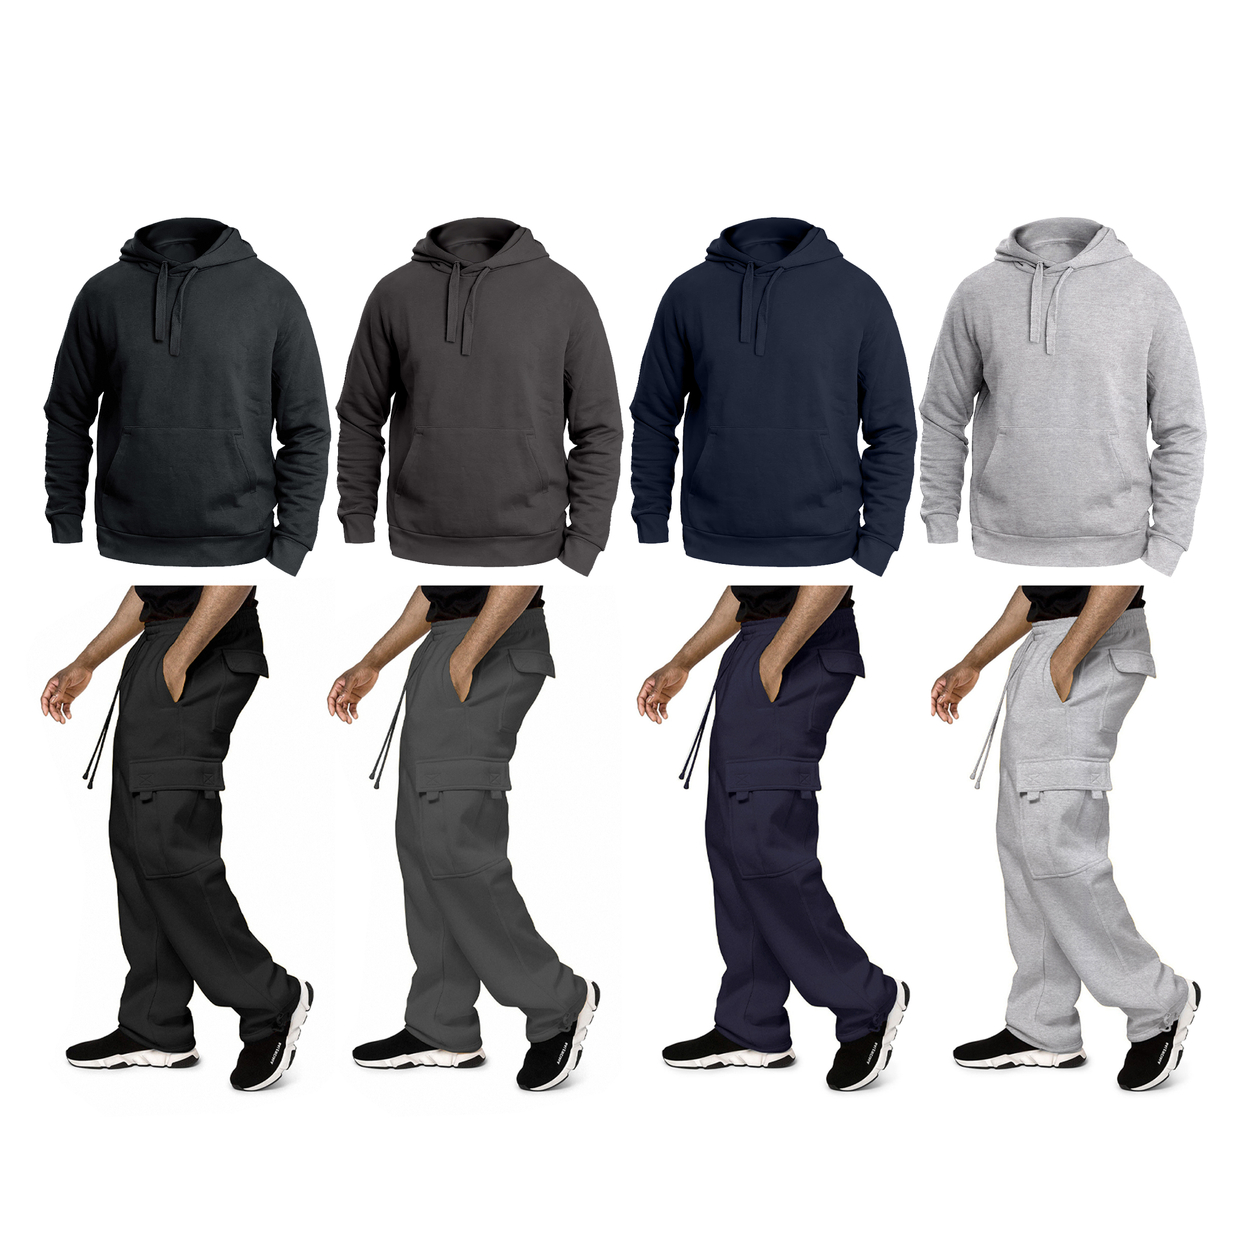 2-Pack: Men's Big & Tall Winter Warm Cozy Athletic Fleece Lined Multi-Pocket Cargo Sweatsuit - Grey, Small